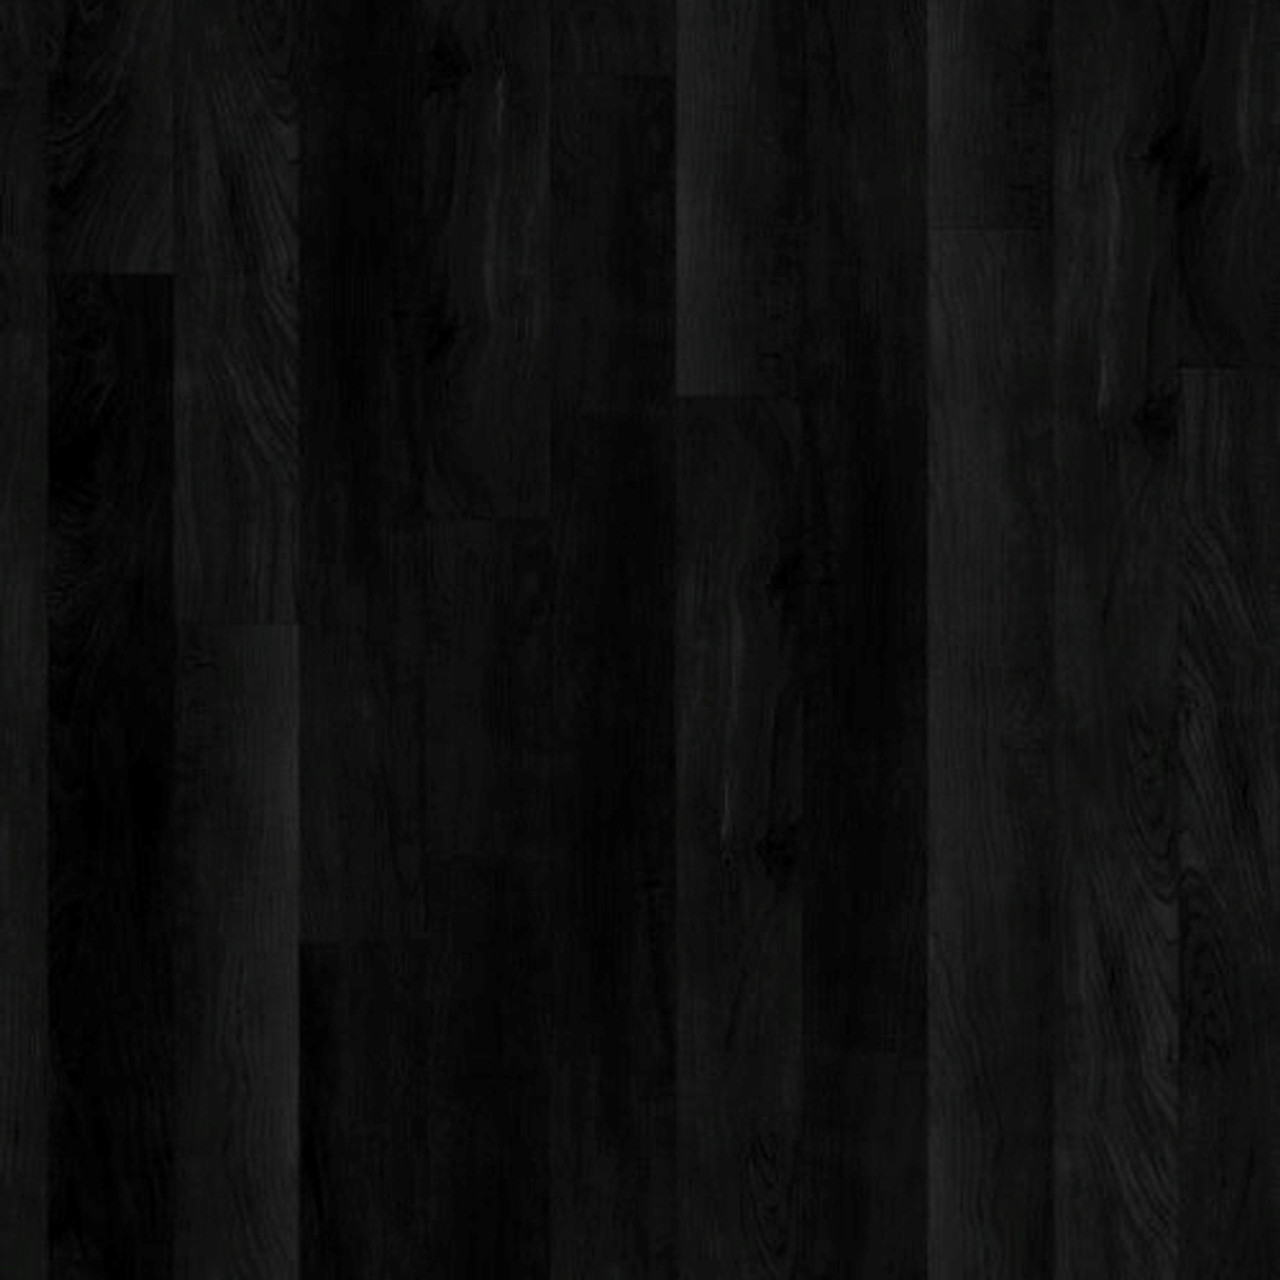 Black and White Vinyl Flooring Vinyl Plank Flooring Sale Best Lvp